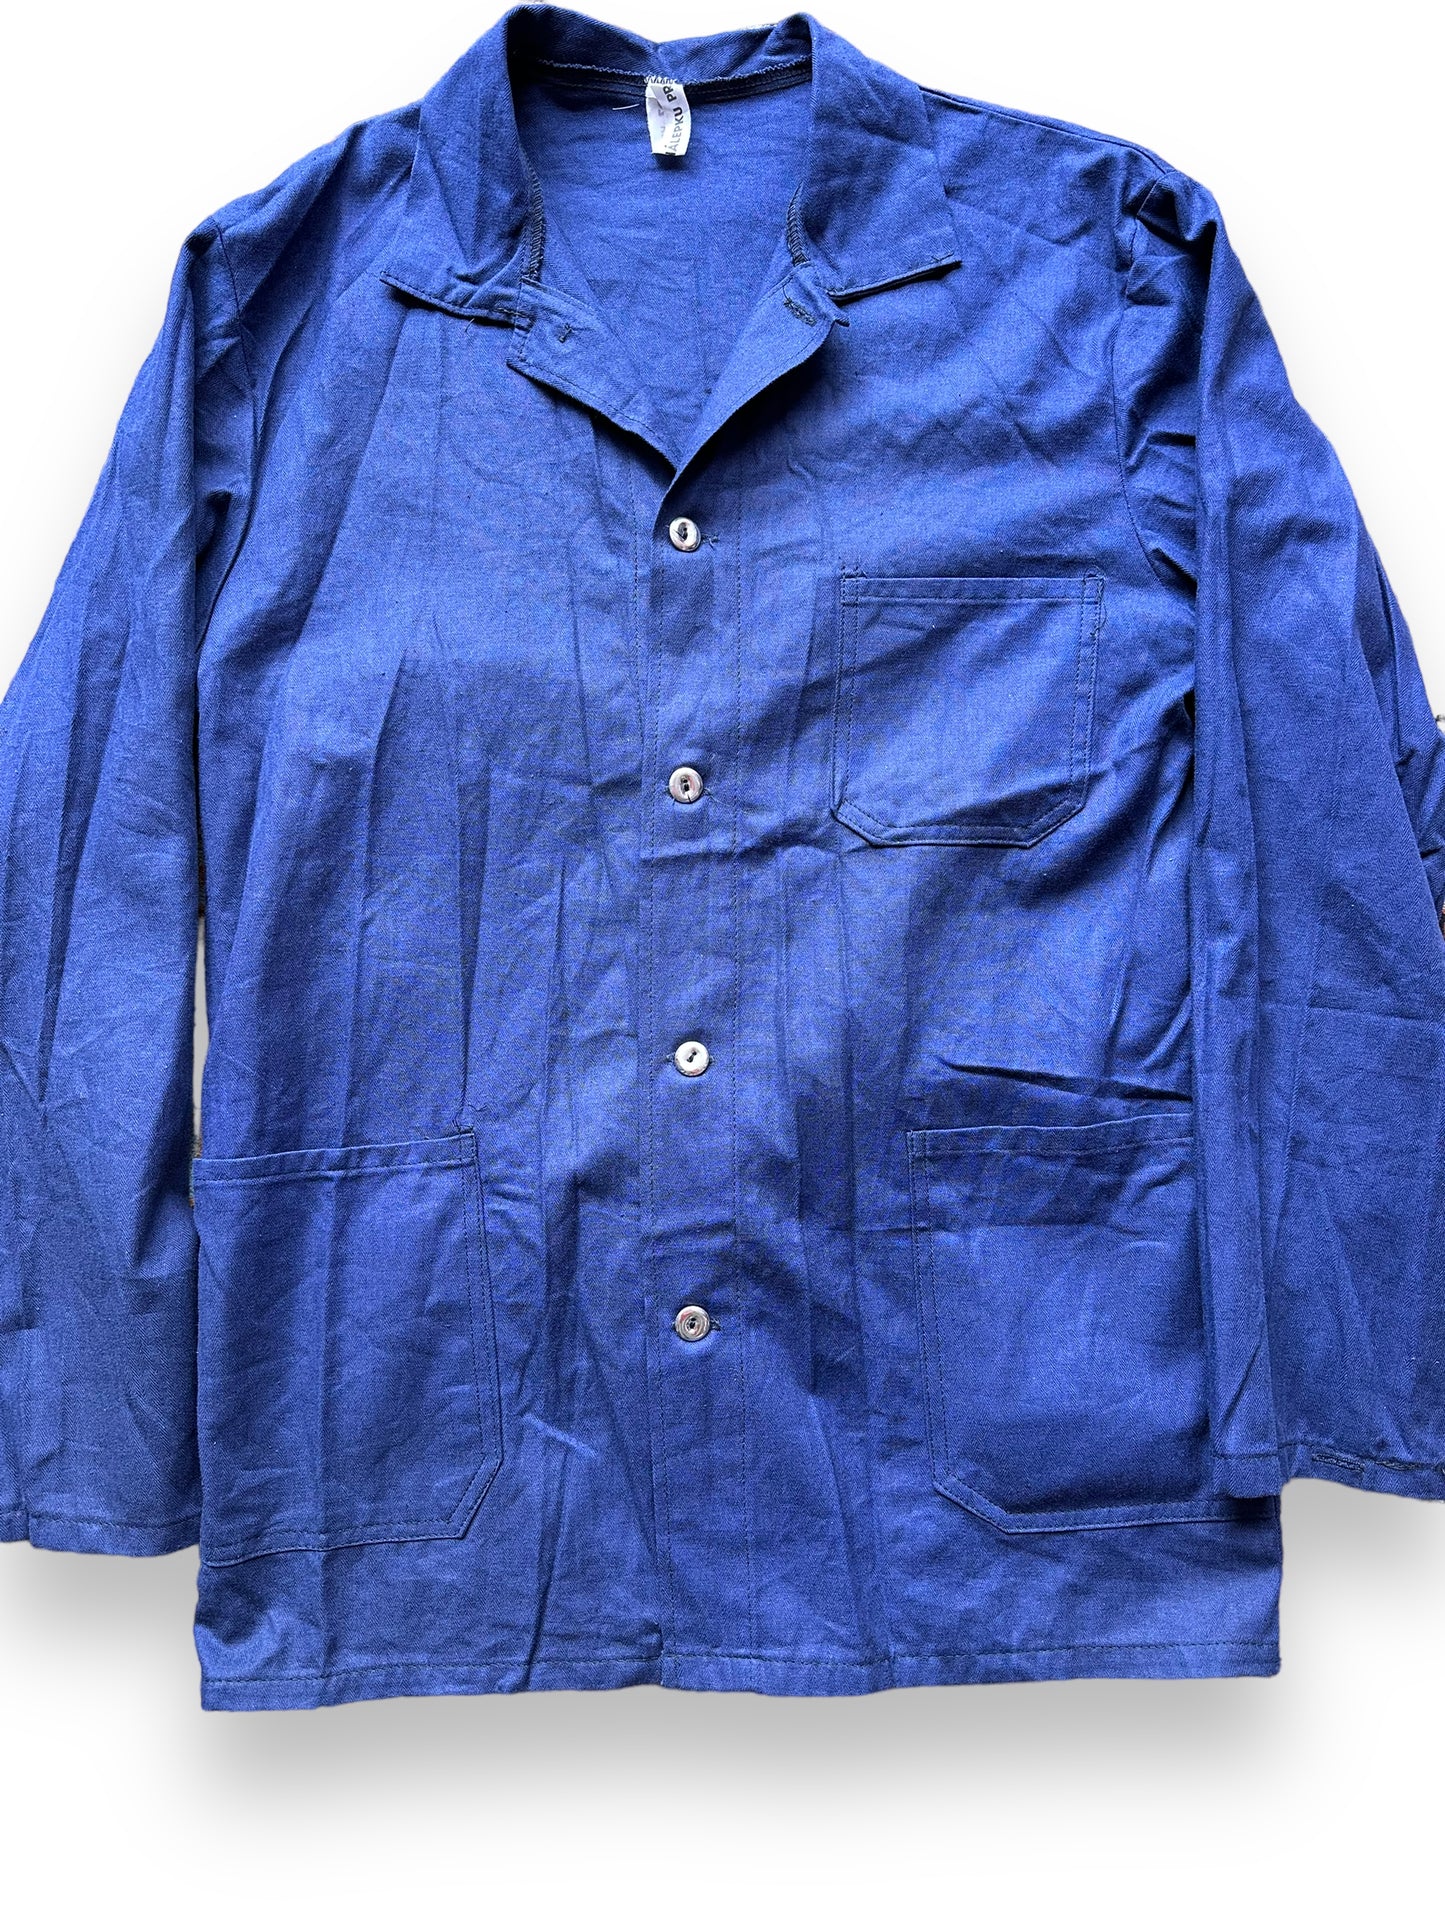 Front Detail on Vintage Light Cotton European Workwear Shirt SZ M | Vintage European Workwear Seattle | Barn Owl Vintage Goods Seattle